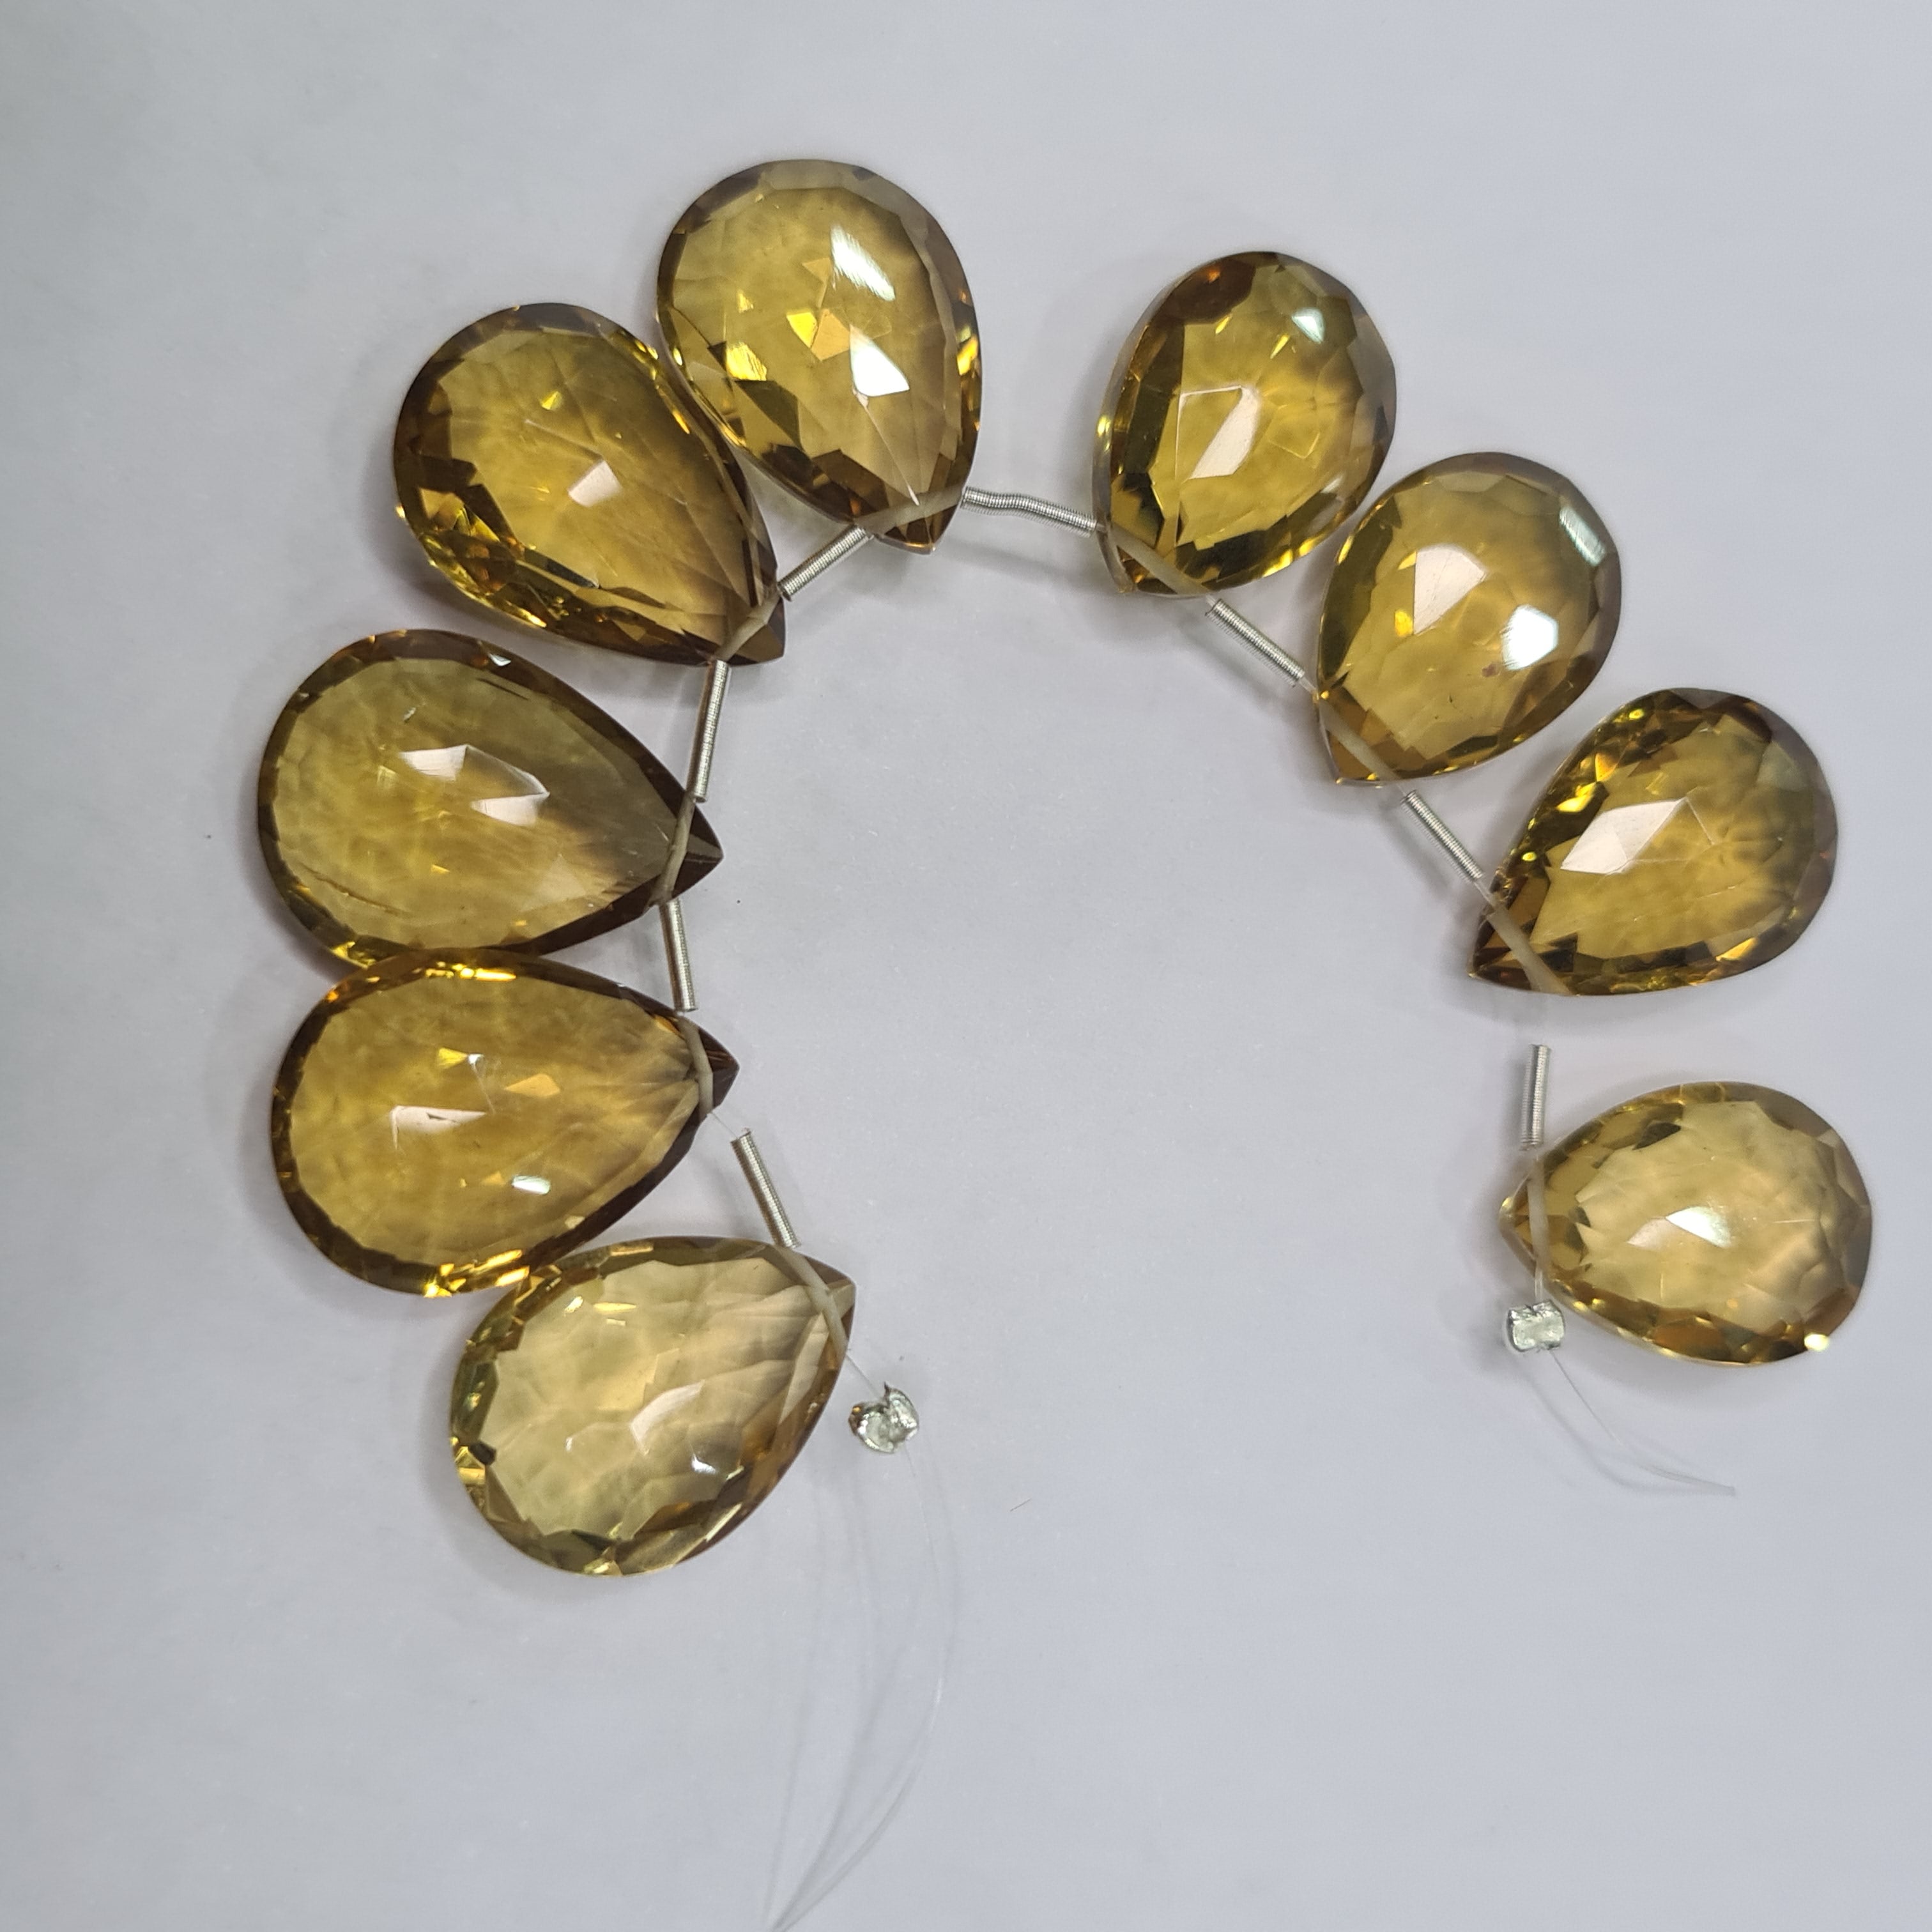 Natural Lemon Quartz Tear Drops Shape,  20x14mm Beads Lemon Quartz Beads Fancy Cut Shape Beads Luster, Faceted Drops Gemstone Beads - The LabradoriteKing